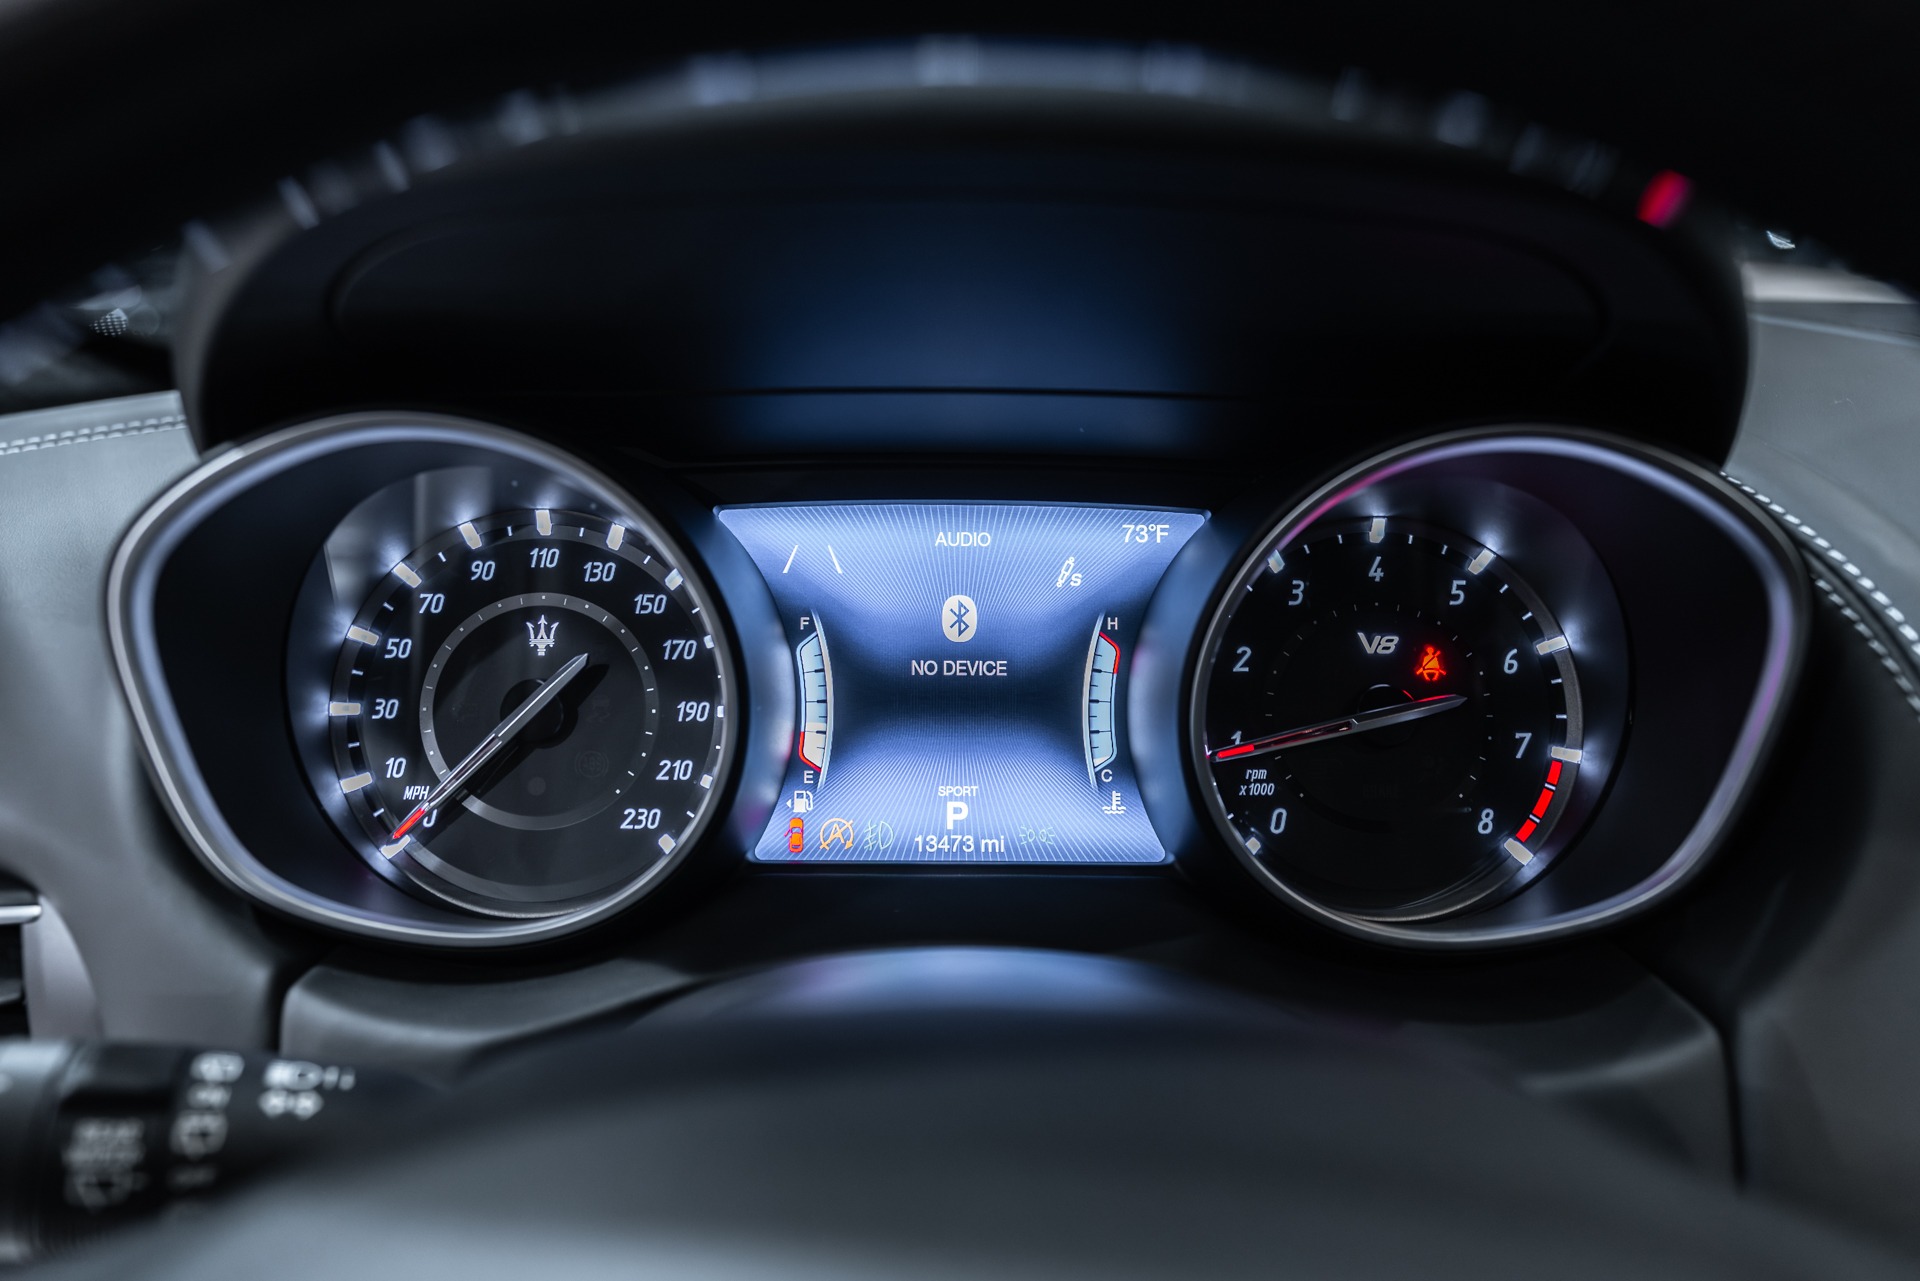 Used-2019-Maserati-Levante-Trofeo-Launch-Edition-1-of-44-AWD-SUV-Carbon-Fiber-Trim-Low-Miles-590HP